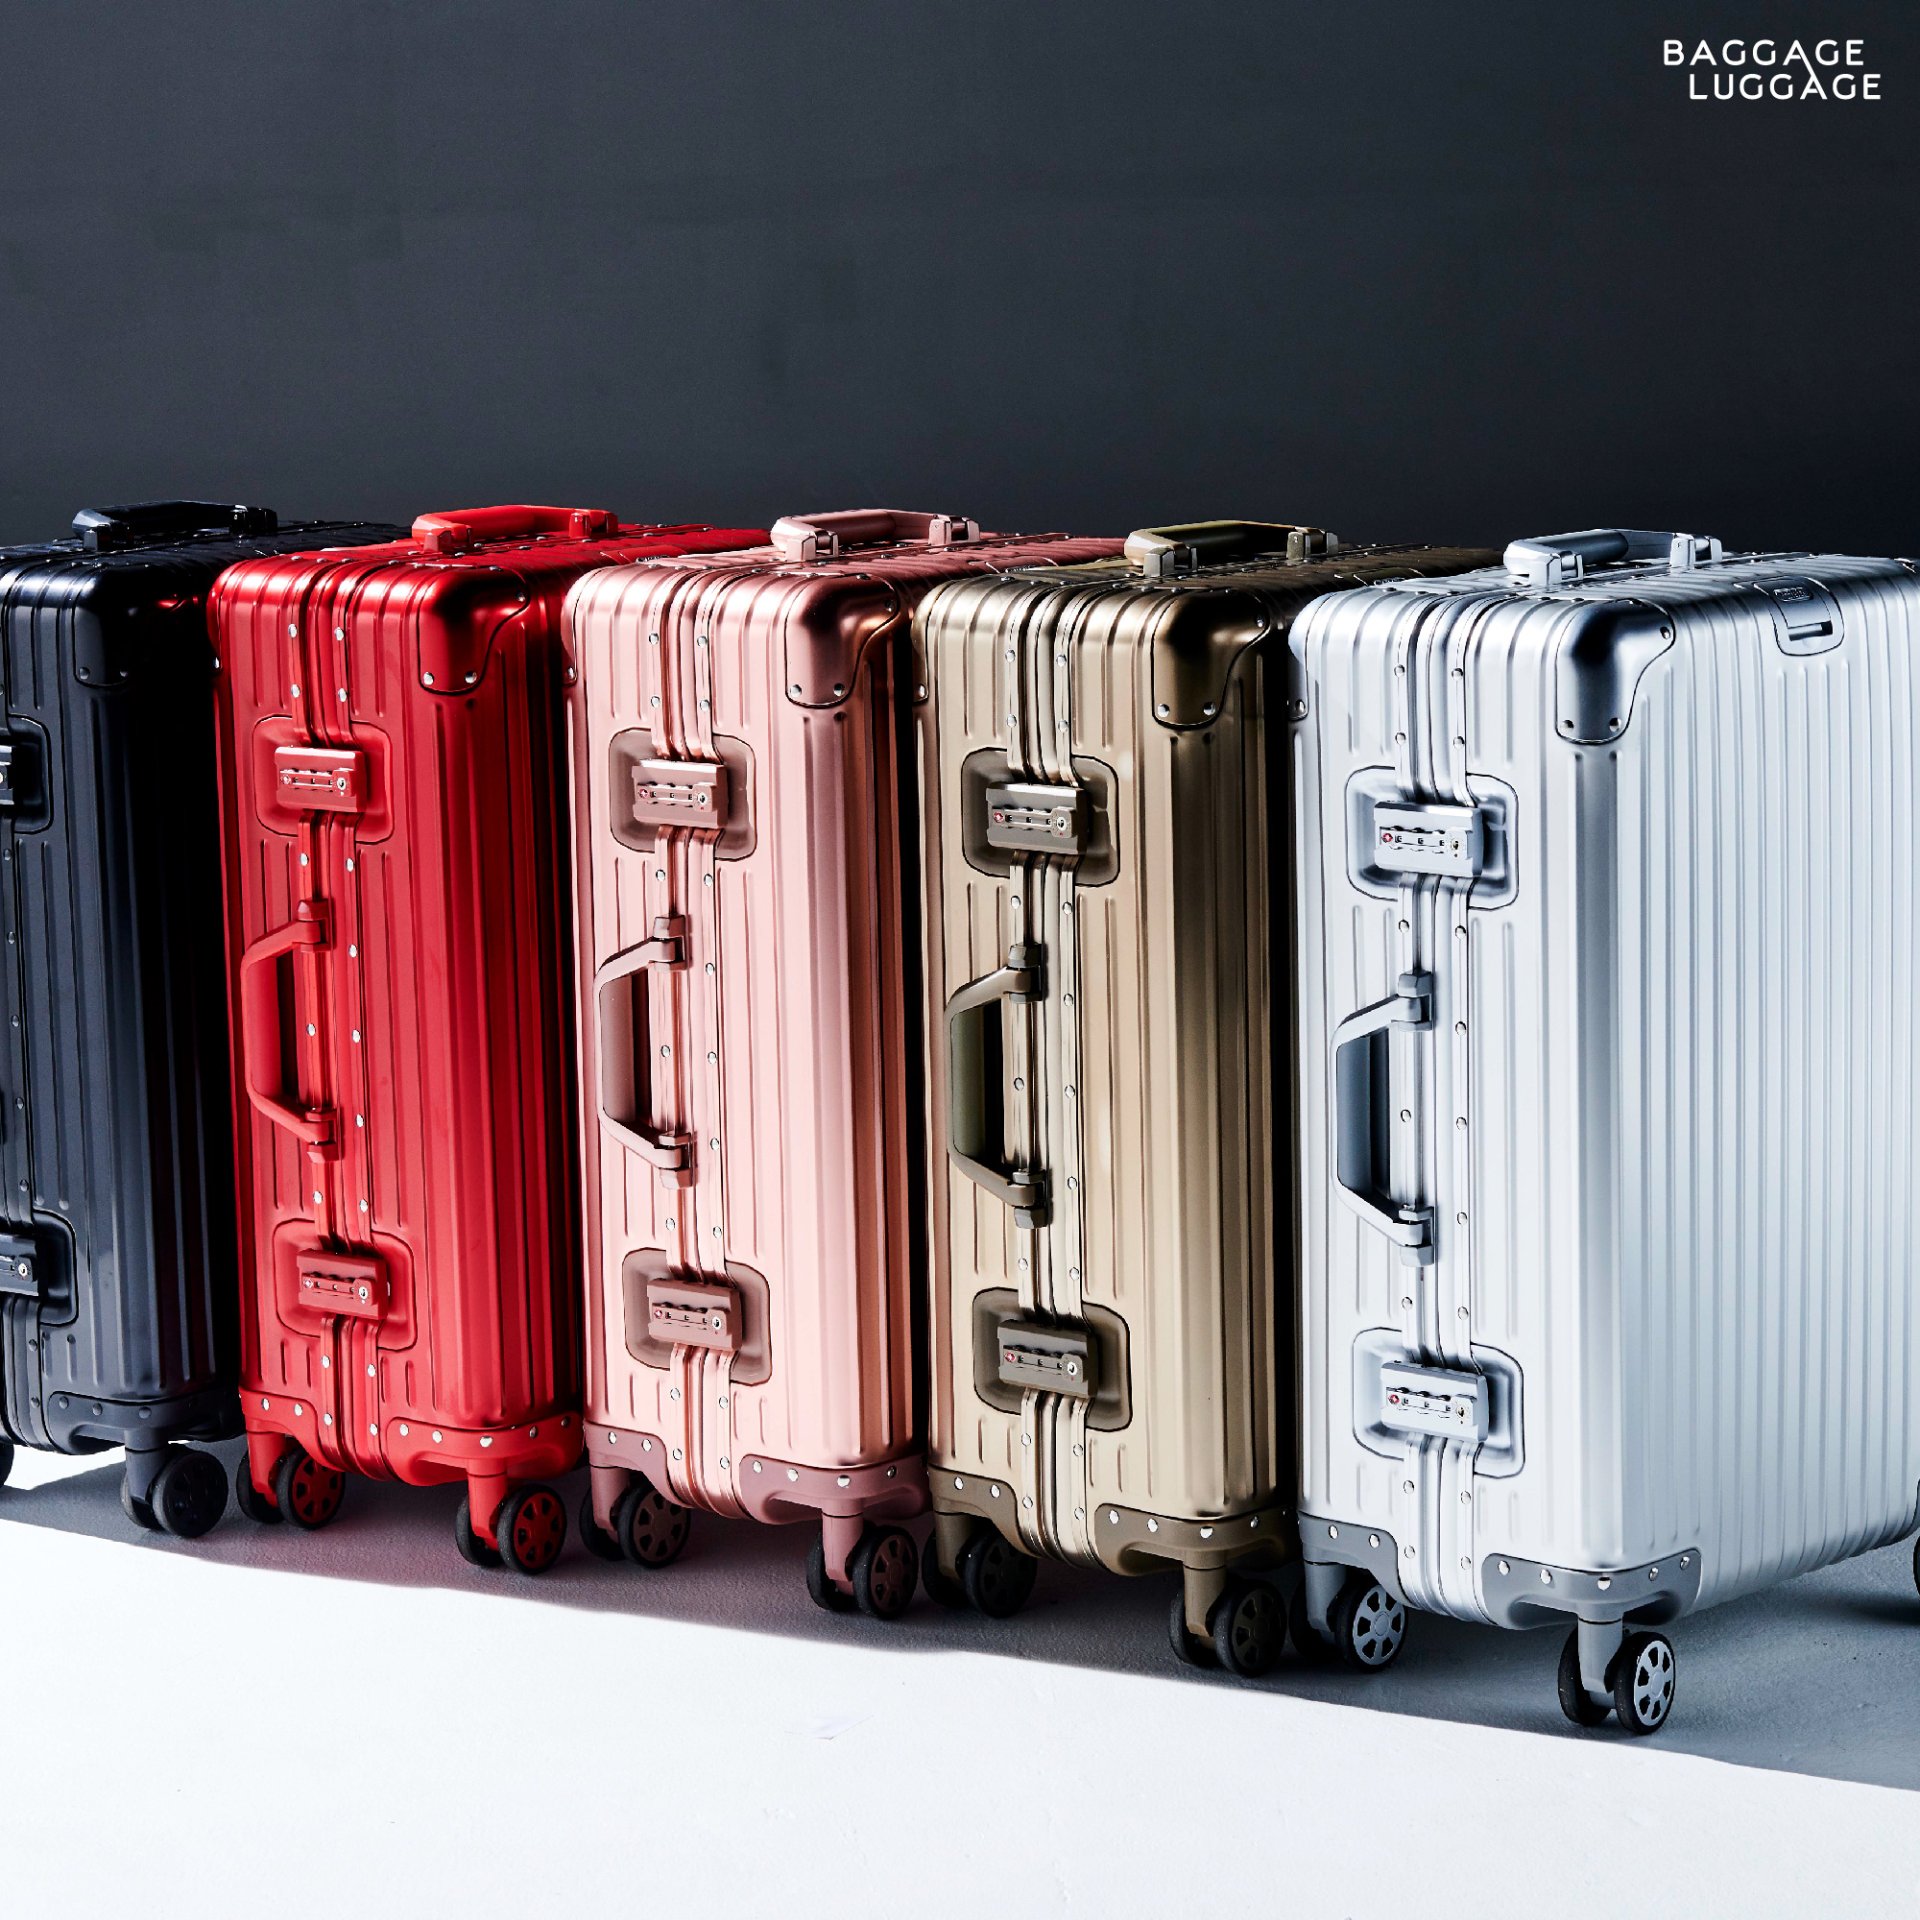 Rimowa Rimowa Classic Cabin S 21 Luggage-Silver (Luggage,16-22 Cabin)